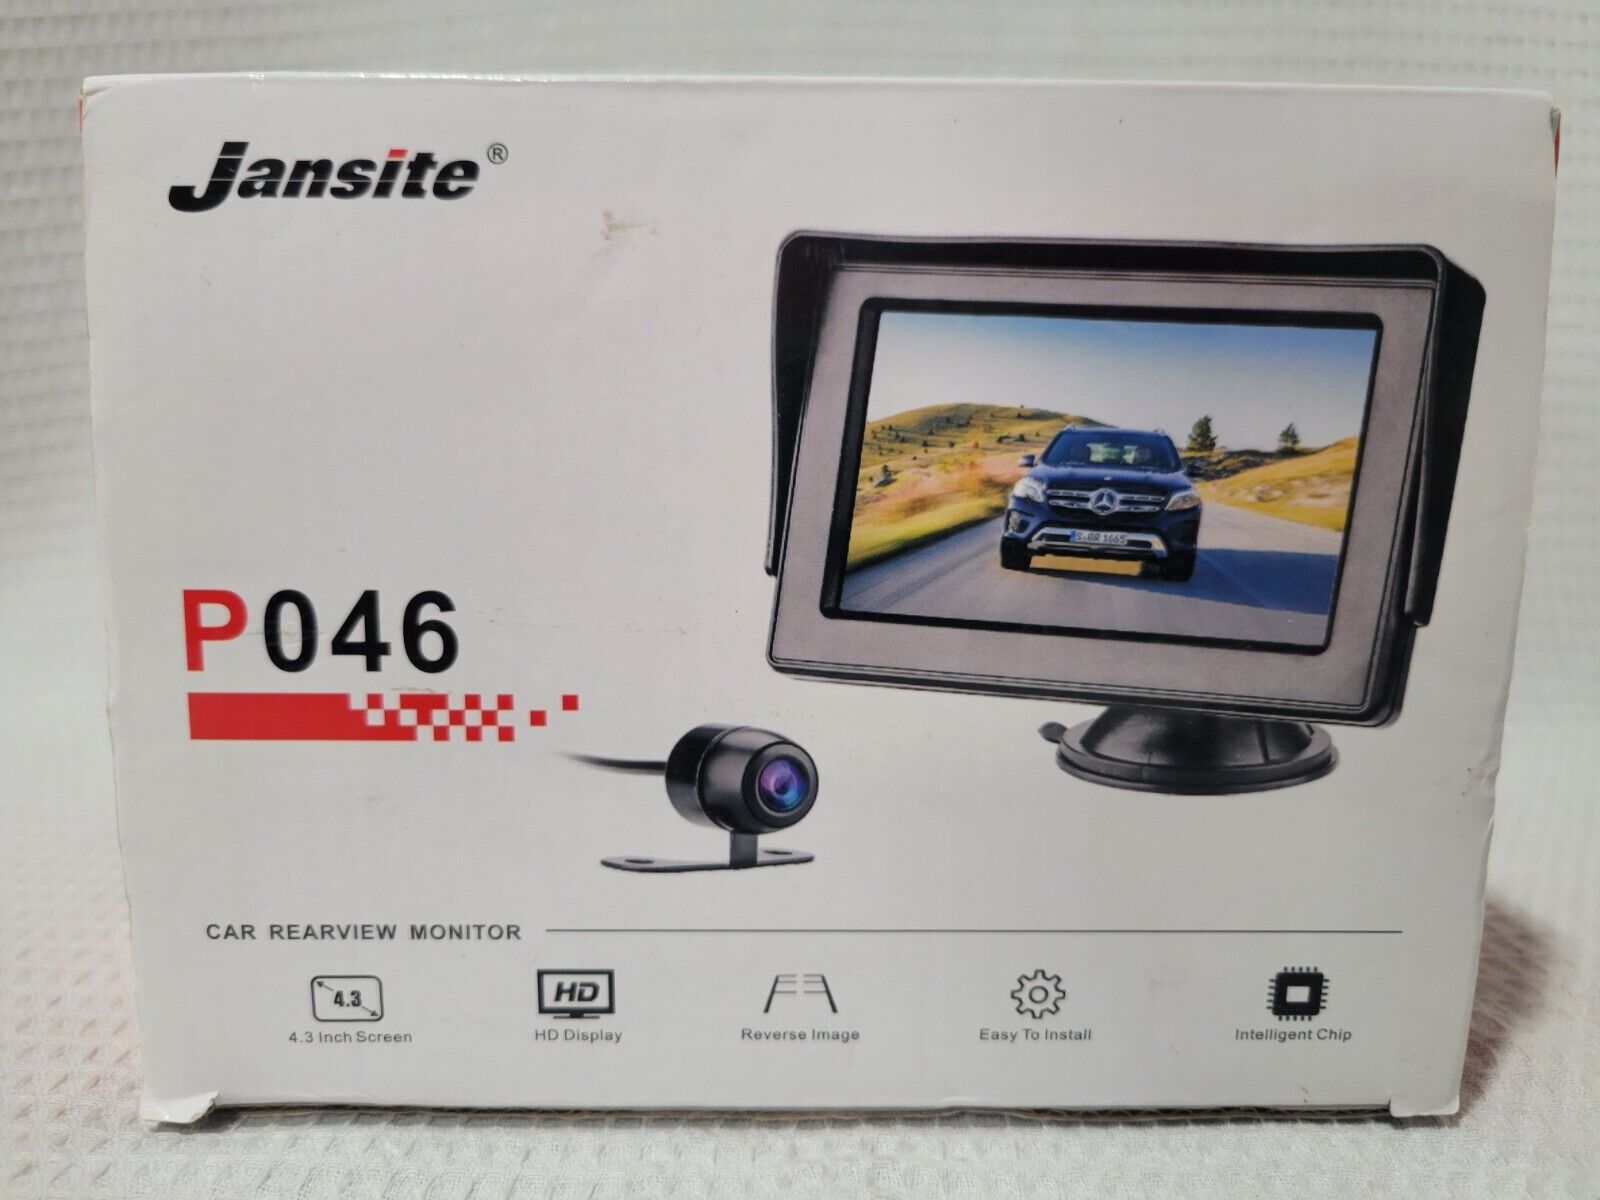 Car camera rear view monitor jansite P046